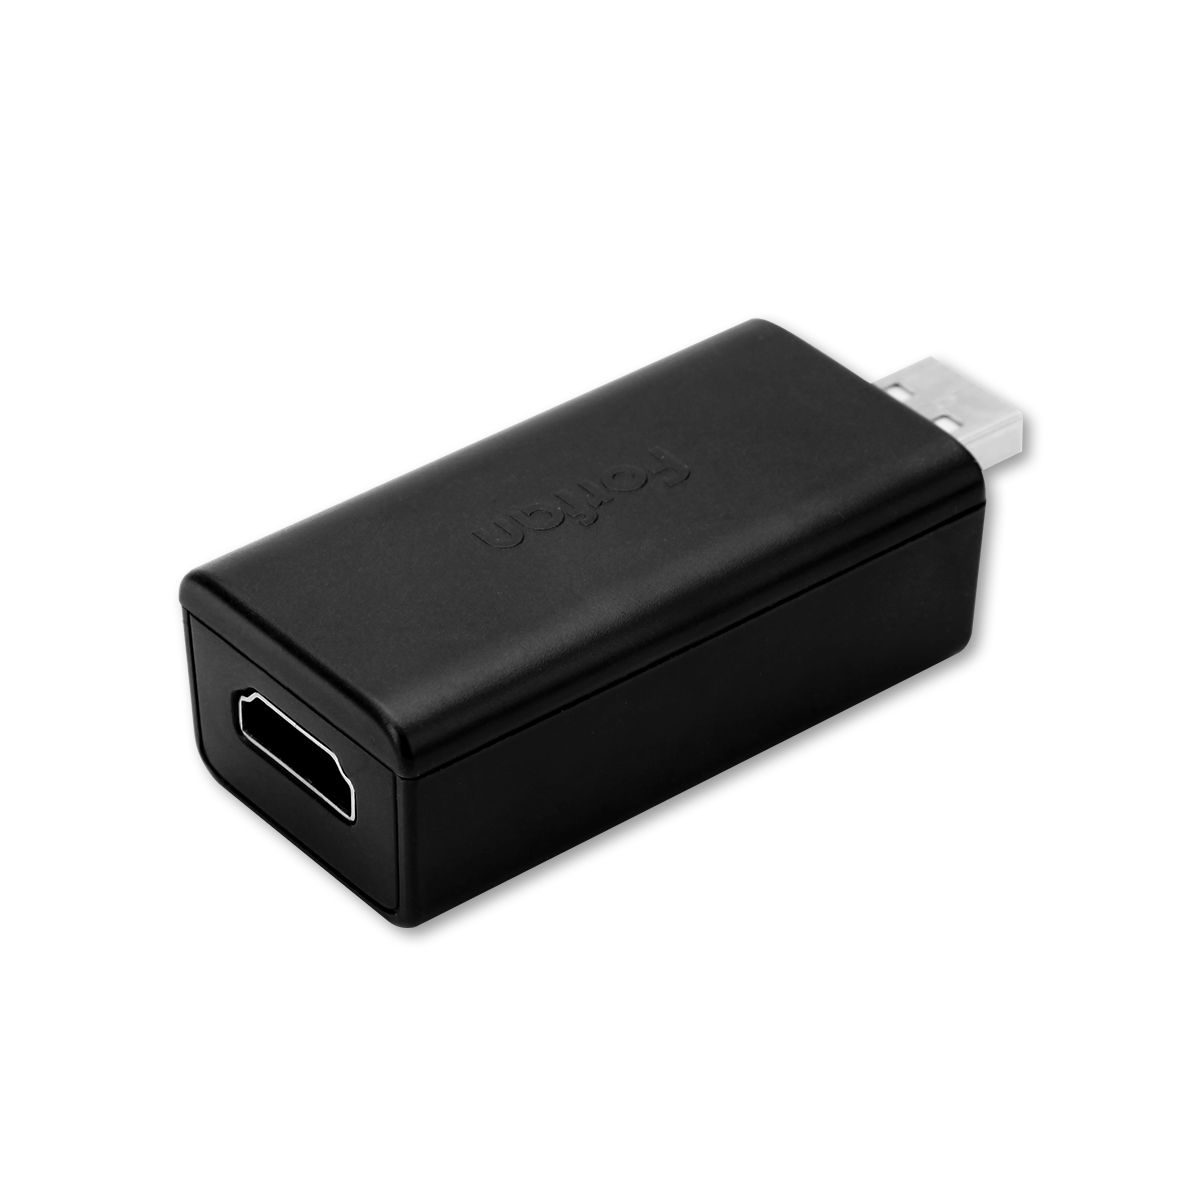 XTRONS USB to HDMI 変換コンバーター HDMI出力 変換アダプタ ナビのDVD USB SD YouTube動画などのすべての画面を外部モニターに出力可 TMA105 DMA105L TMA701L機種に専用 6ヶ月保証 (USBHDMI)